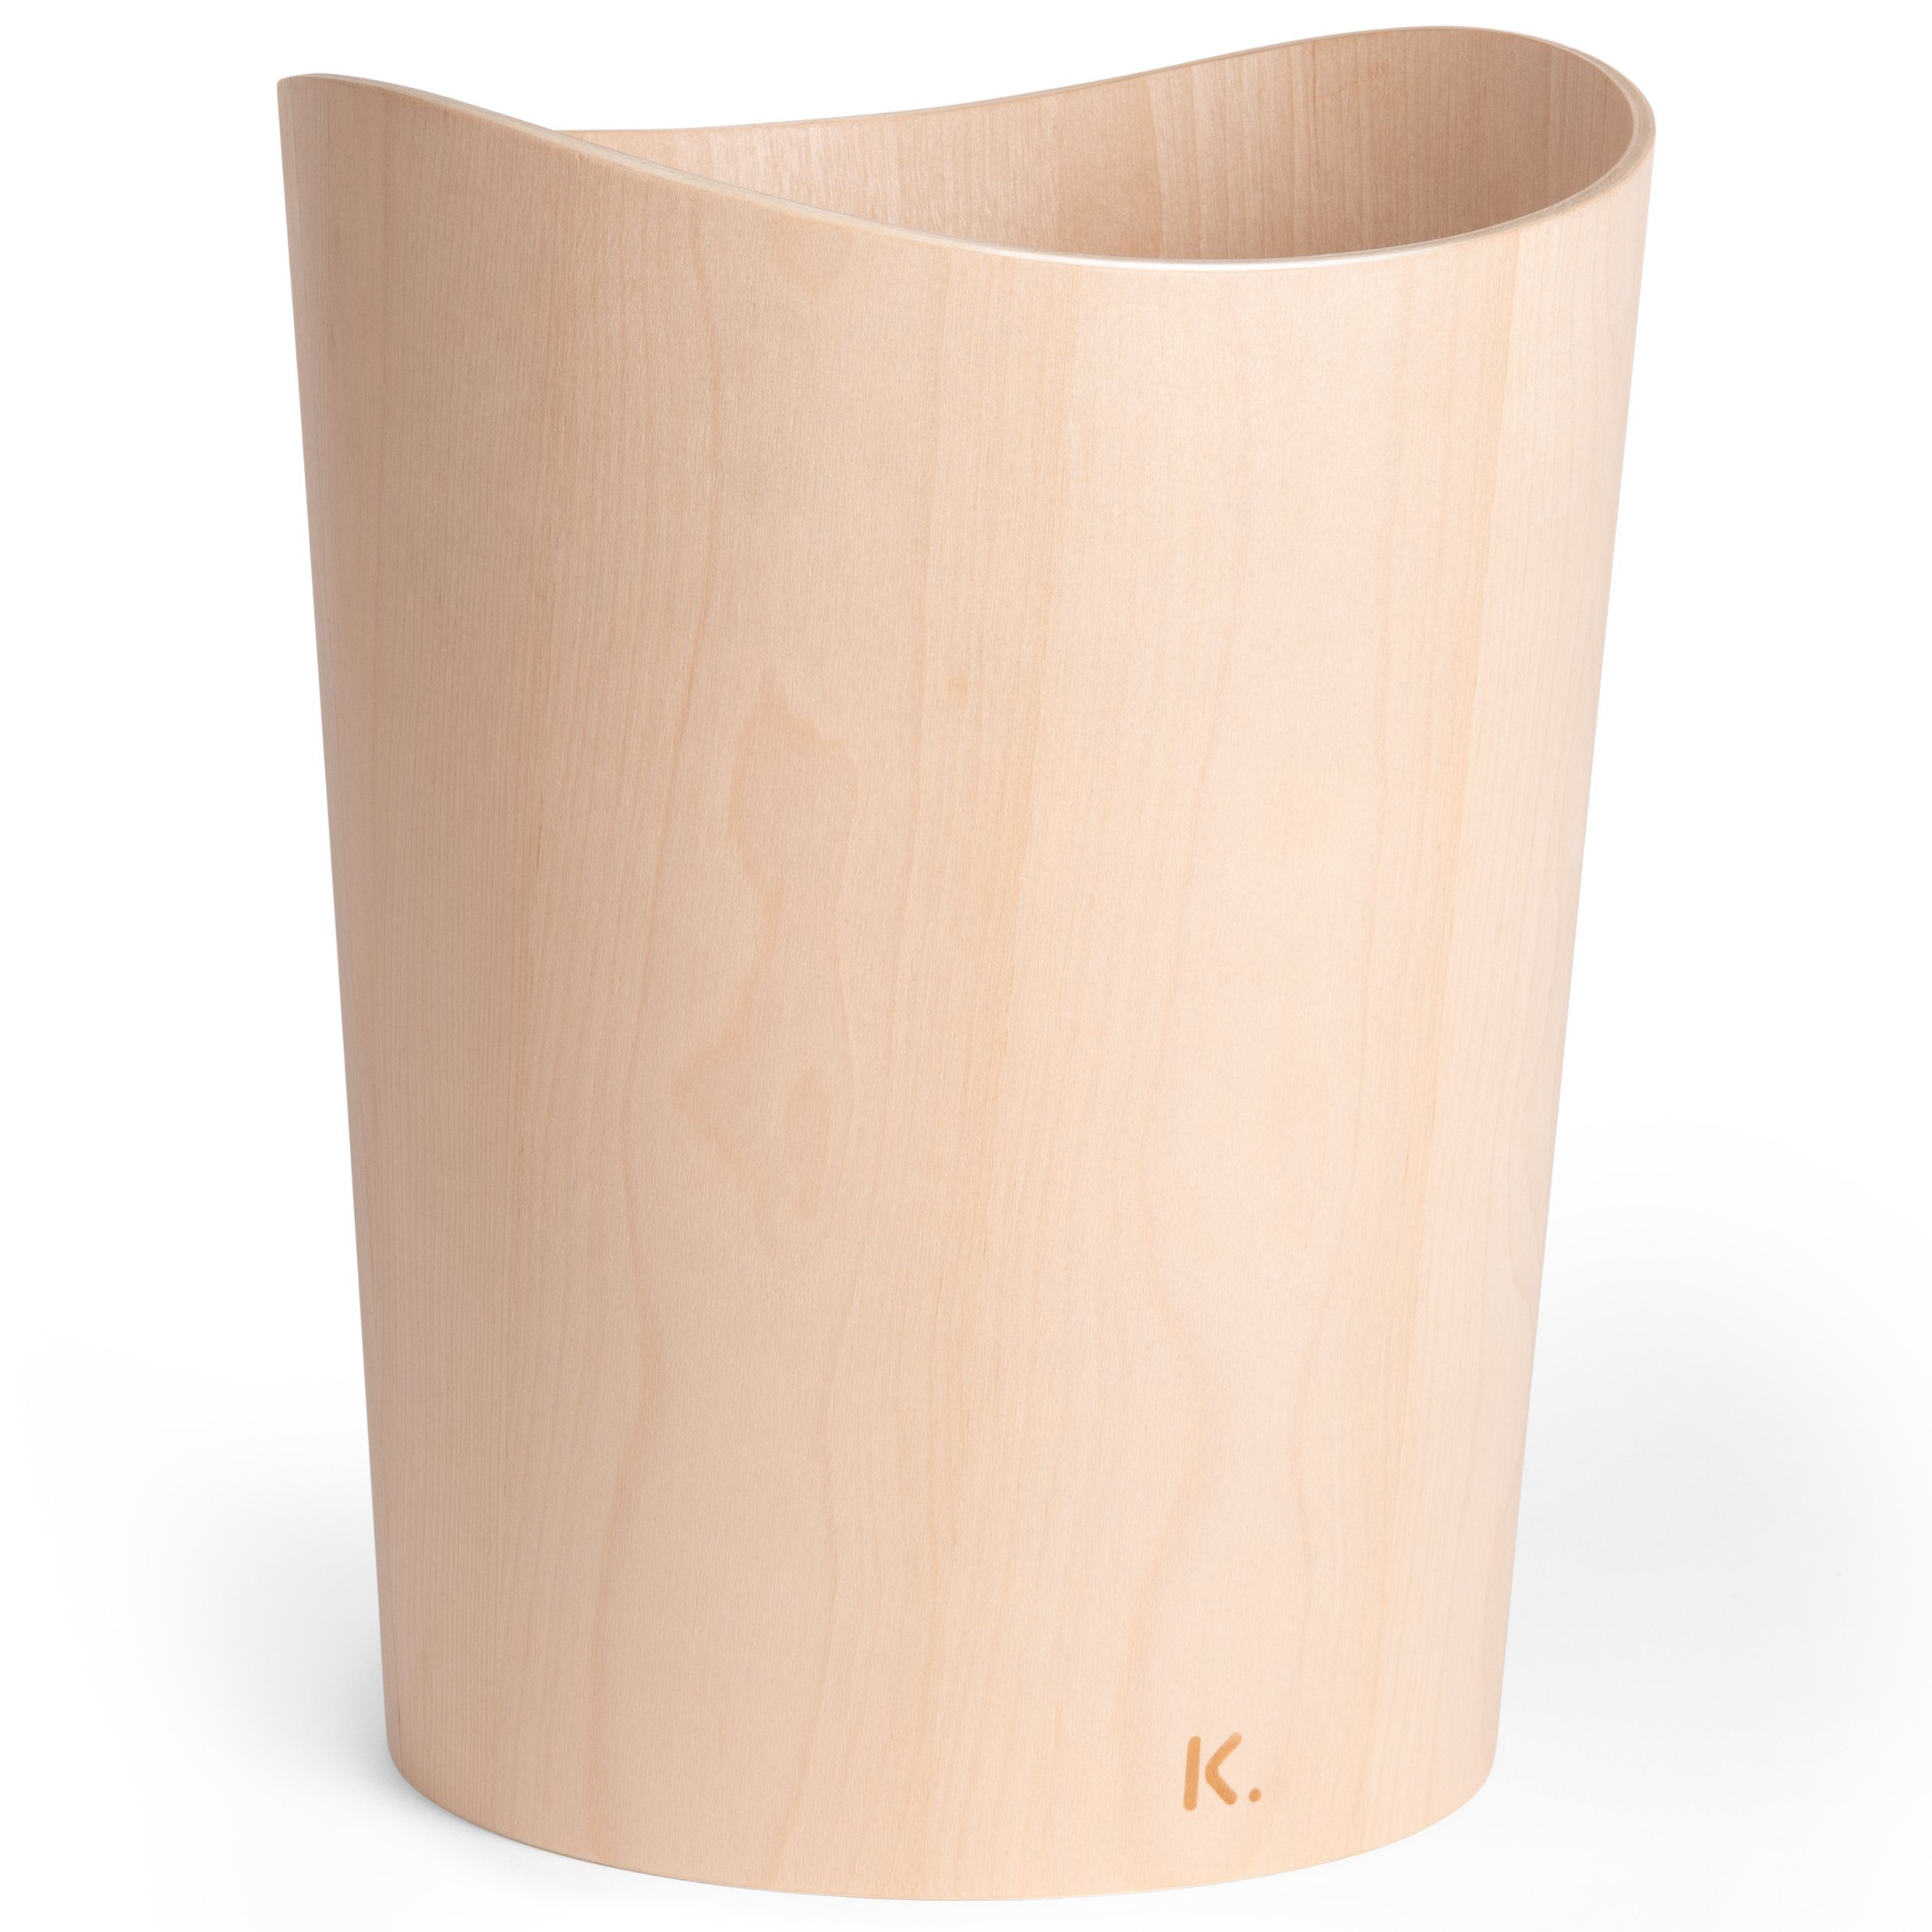 KAZAI. Papierkorb Börje, Design Papierkorb mit massivem Holzkern und  Echtholz-Veneer